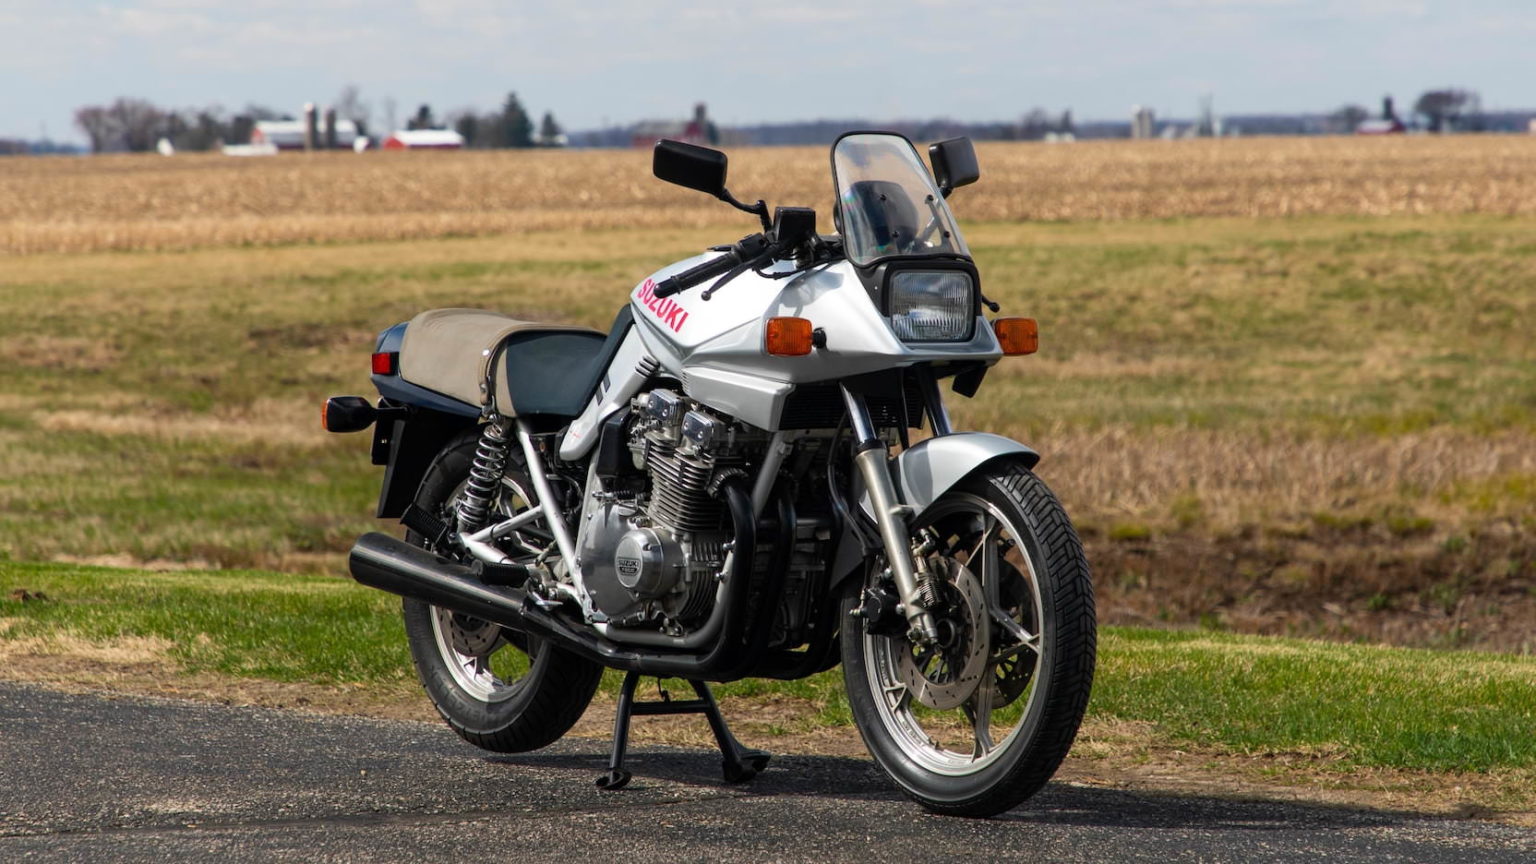 An Original Suzuki Katana - The German-Japanese Superbike That Changed ...